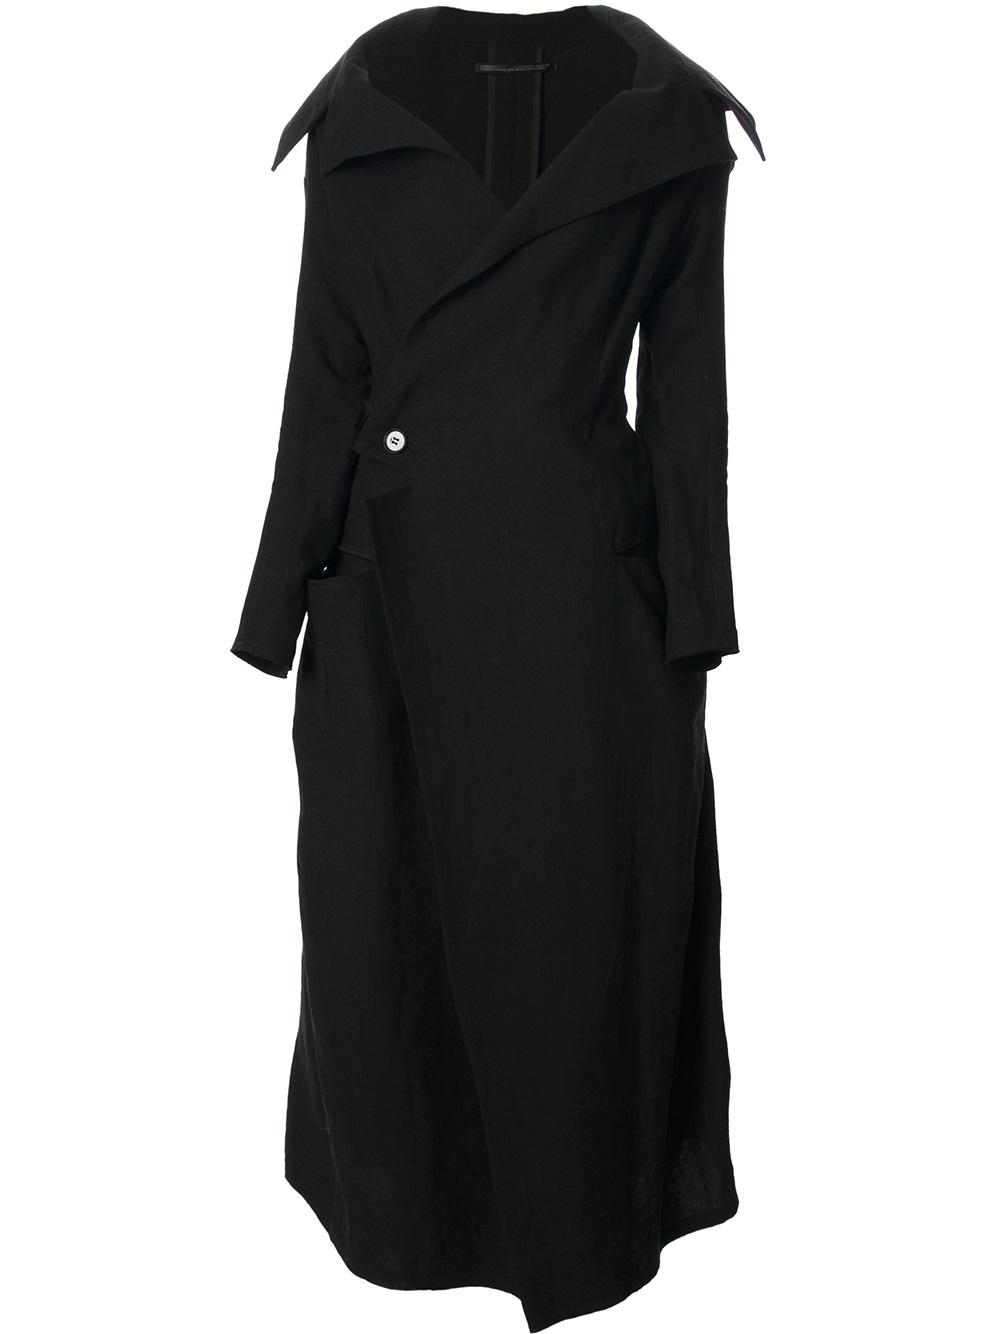 Lyst - Yohji Yamamoto Structured Long Trench Coat in Black